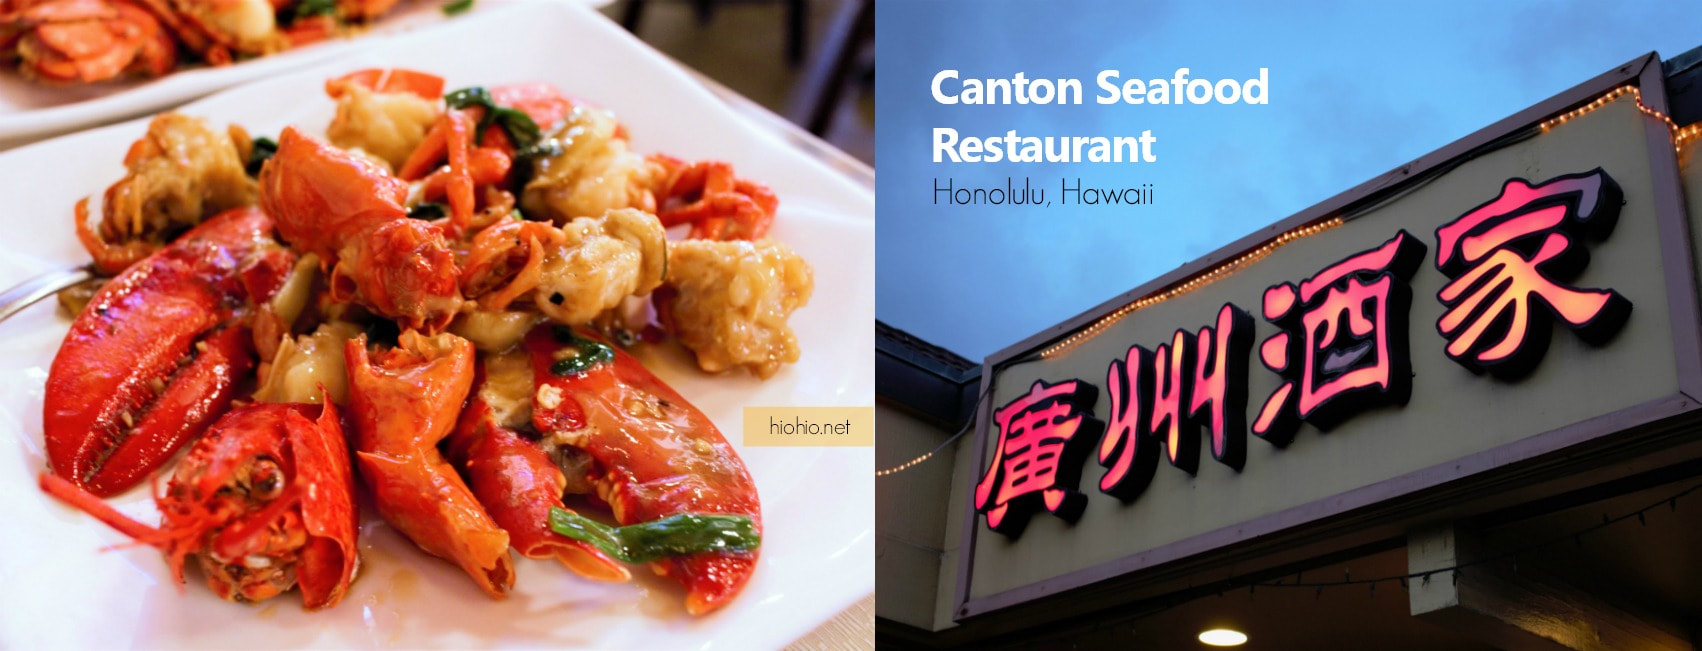 Canton Seafood Restaurant Honolulu Hawaii (signage and fresh lobster).